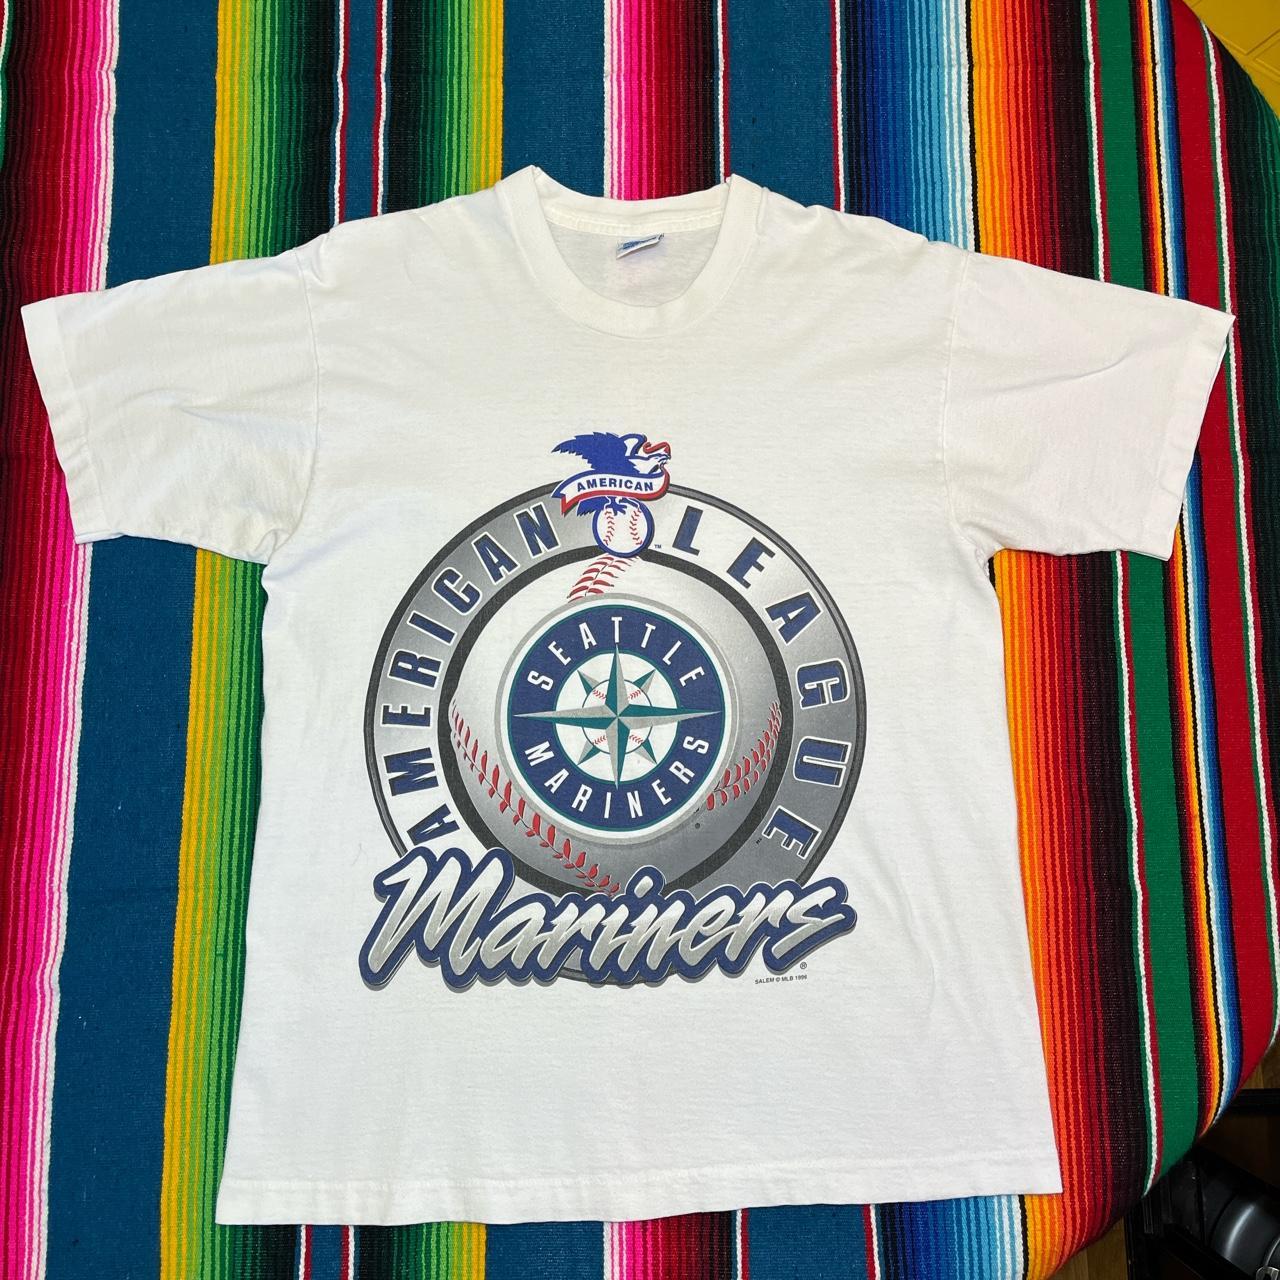 MLB T-Shirt - Seattle Mariners, Medium